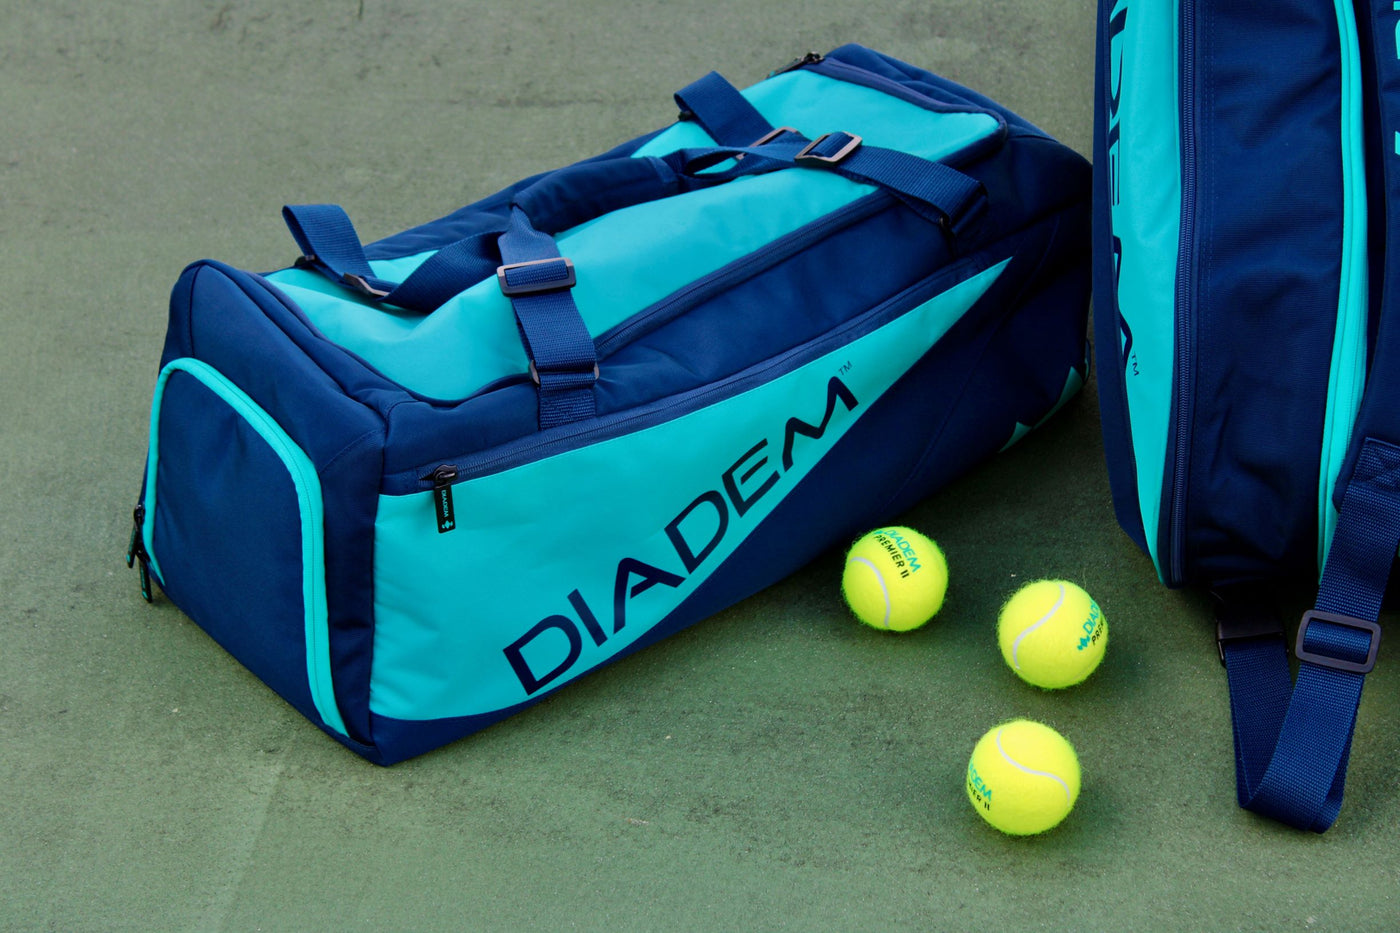 Diadem Tour Elevate Duffel Bag (Teal/Navy) - Diadem Sports